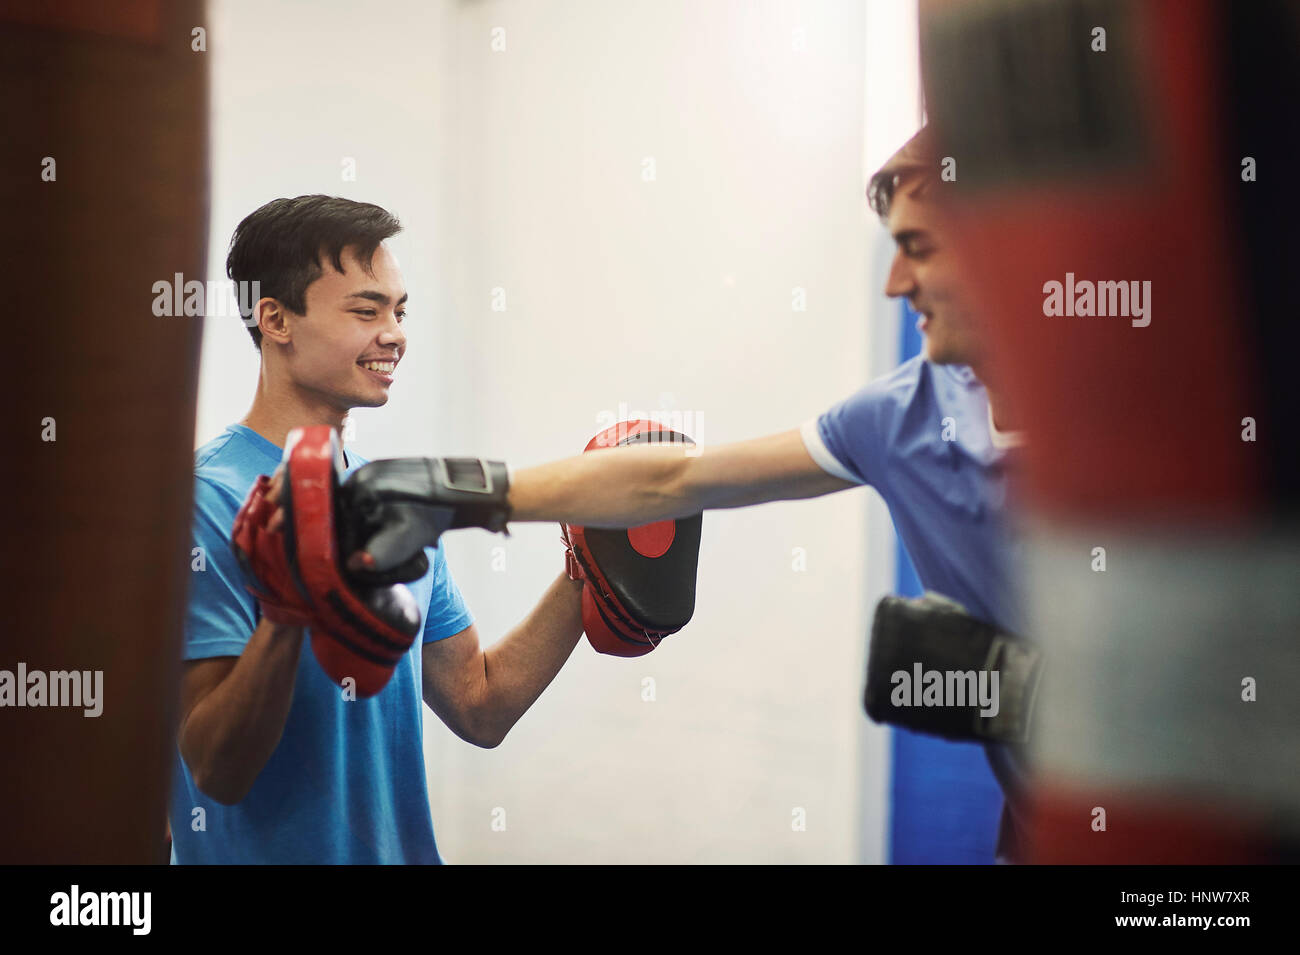 Male boxer training, punching teammate's punch mitt Stock Photo